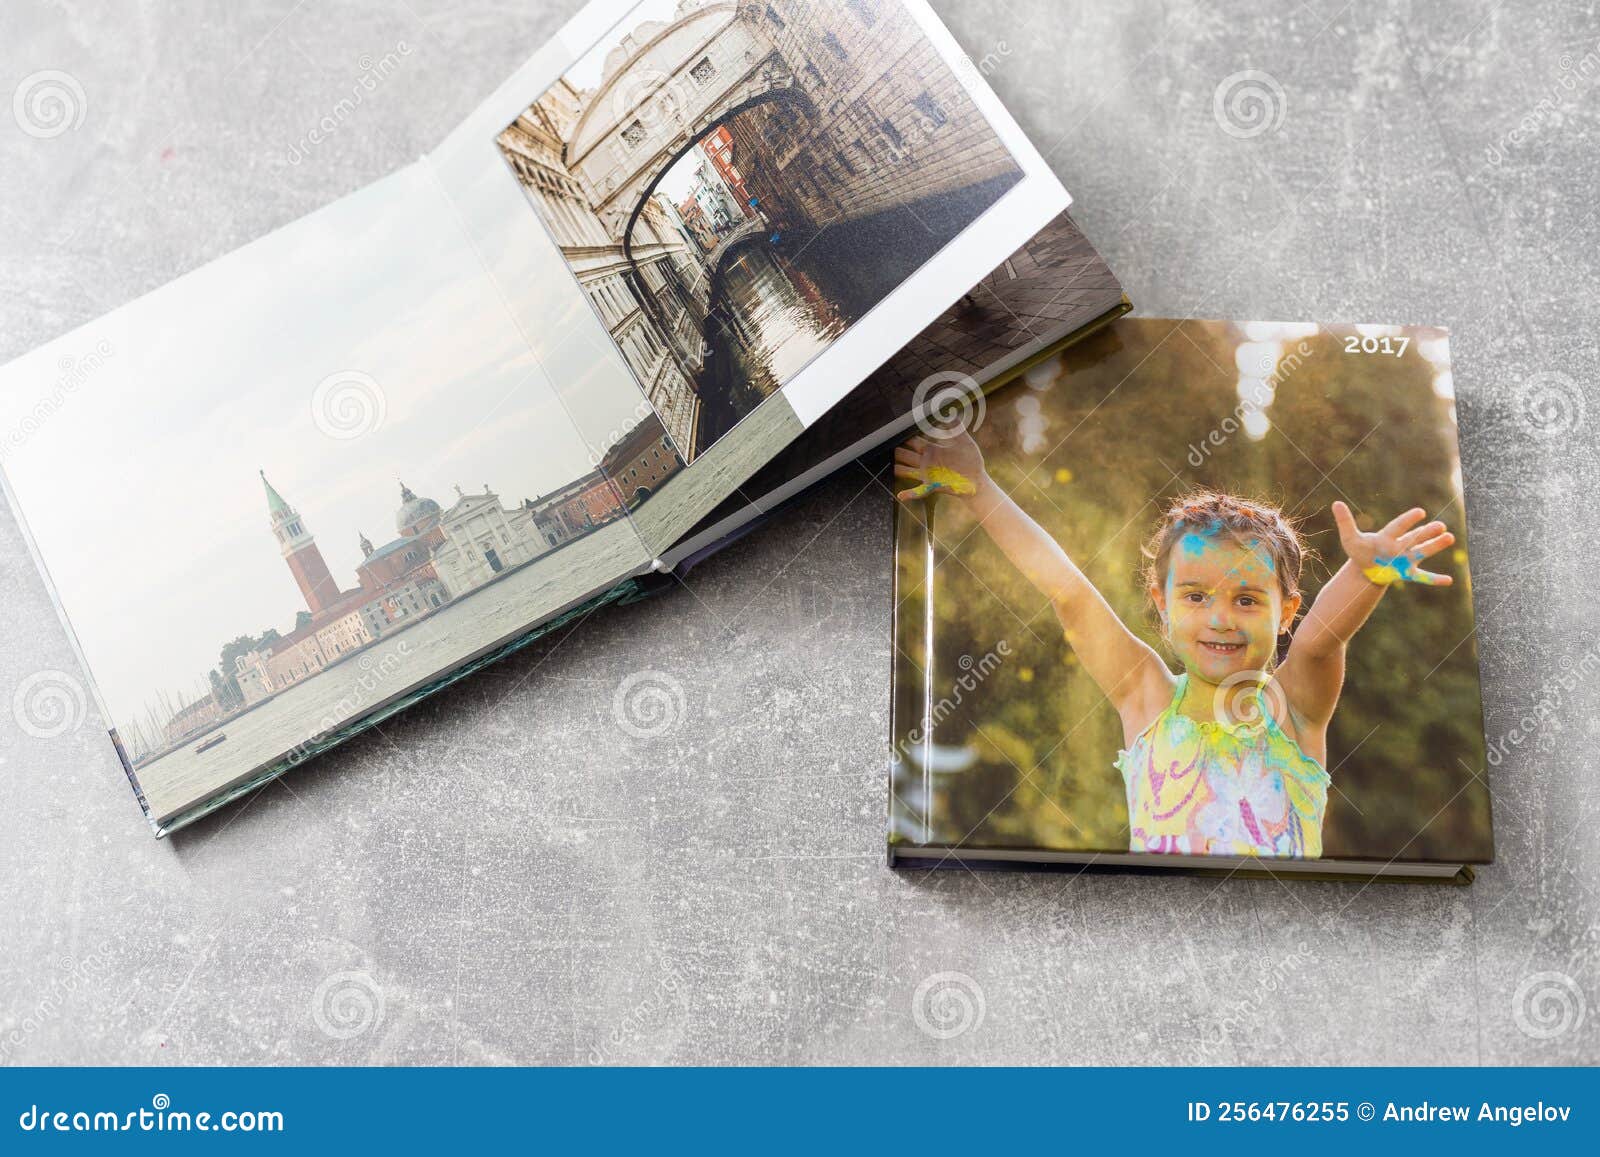 Photobook Album with Travel Photo on Table Stock Image - Image of